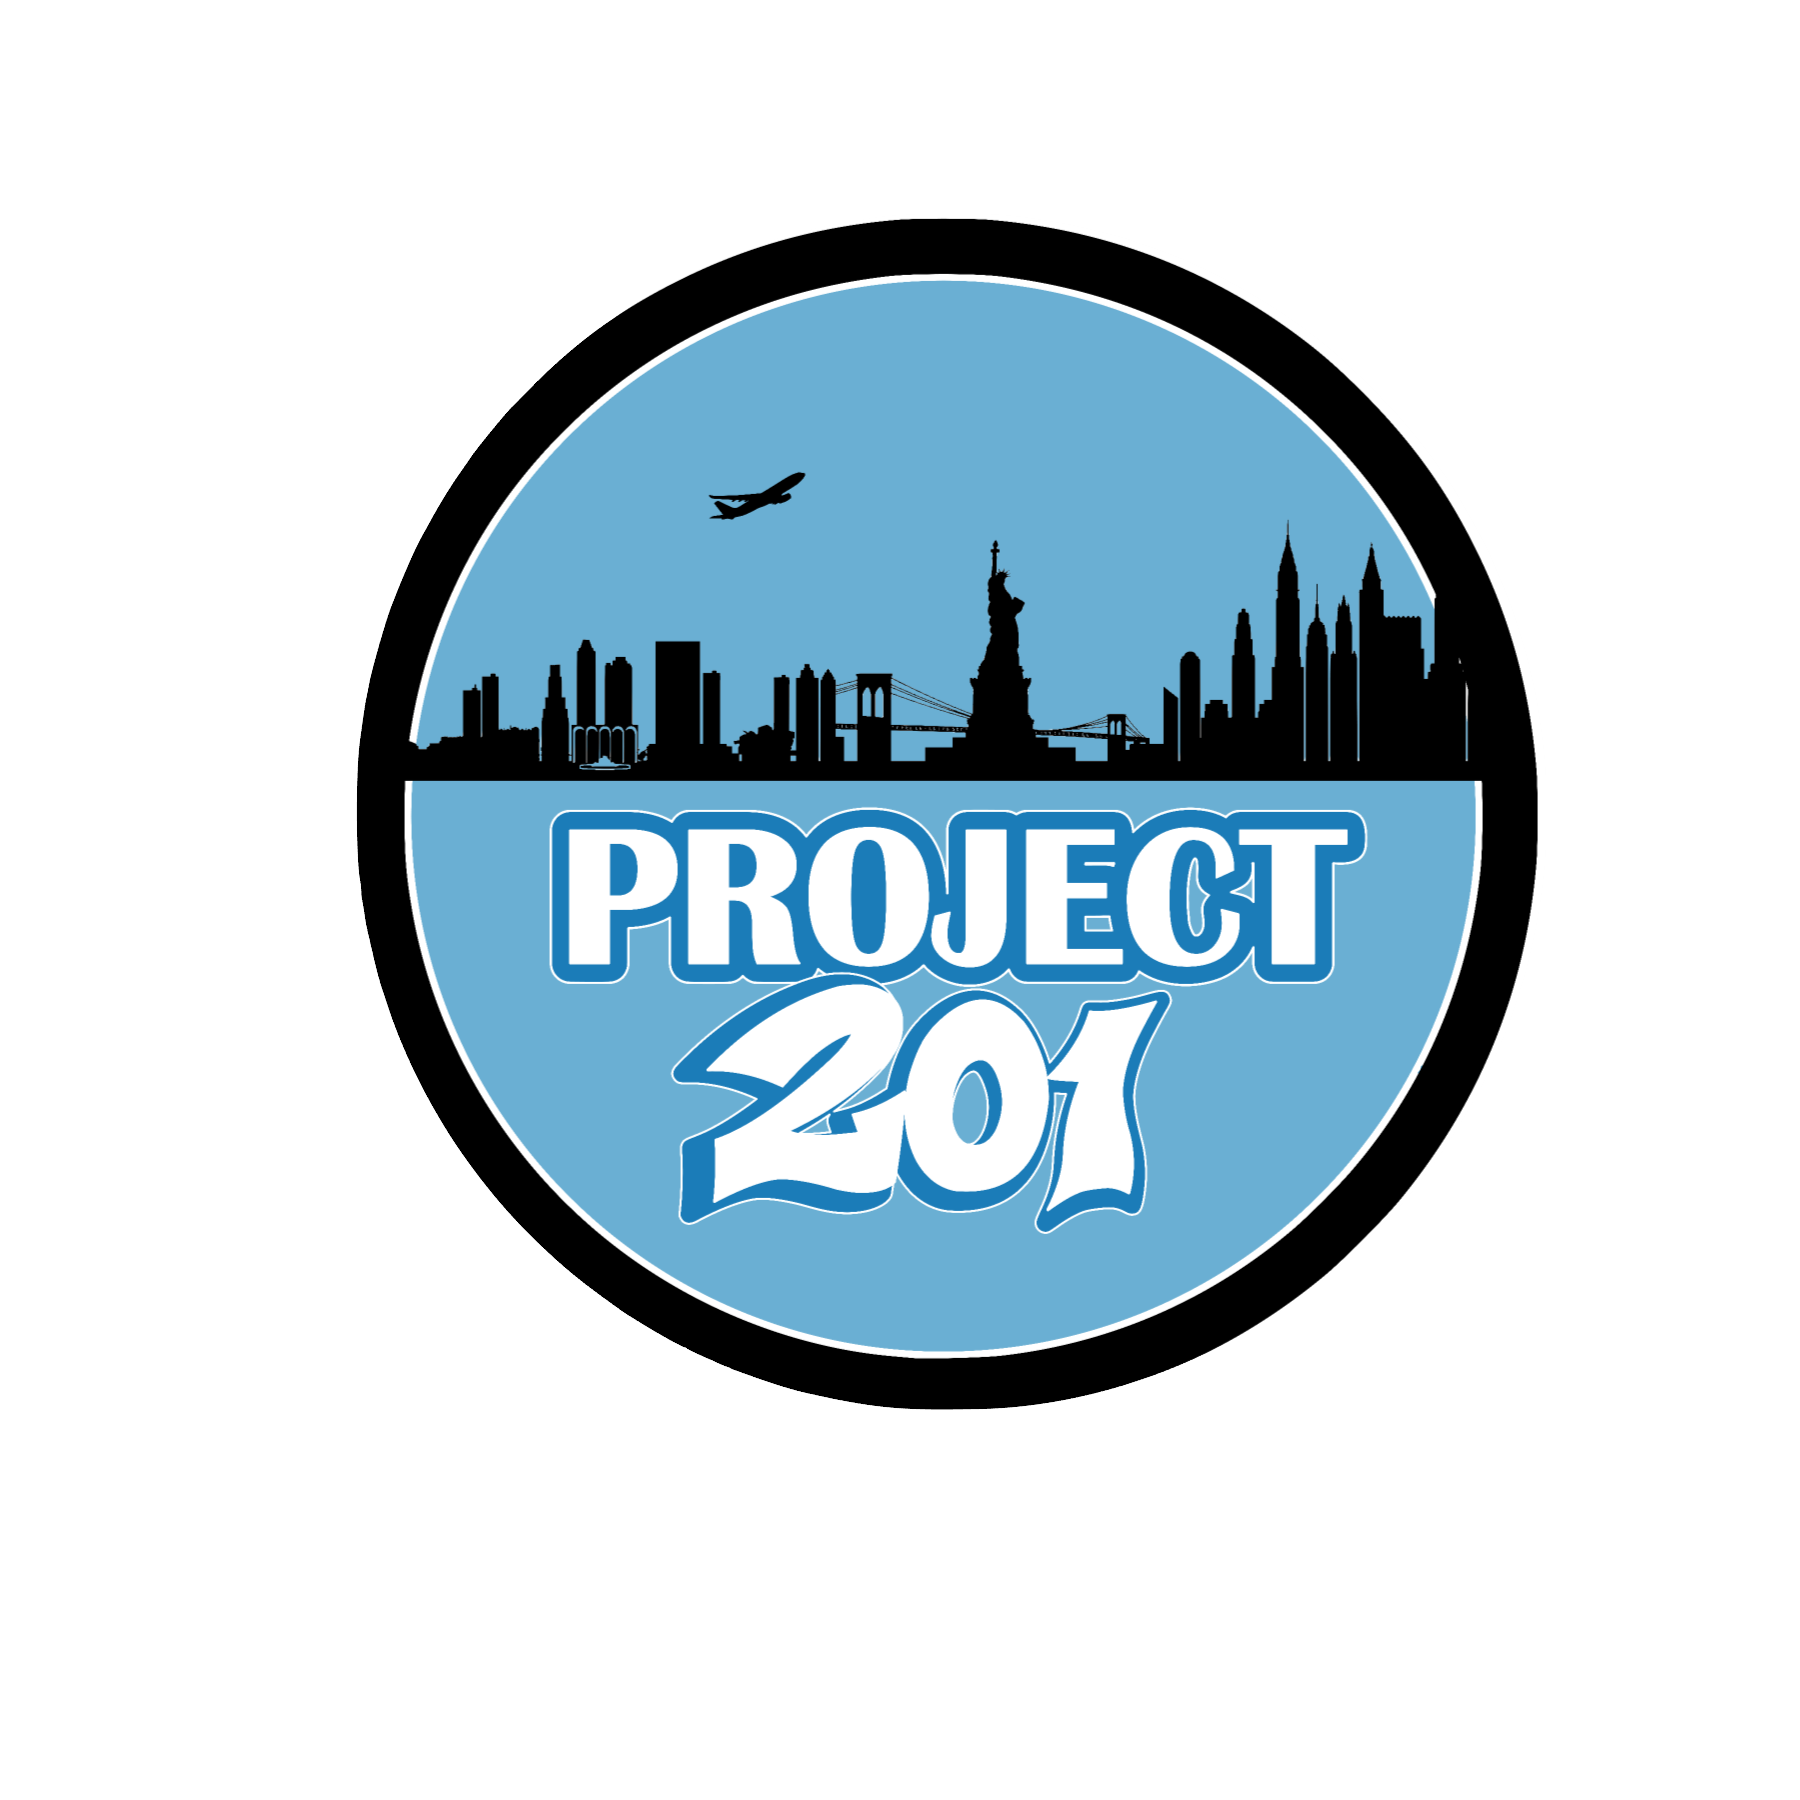 Project 201 Inc